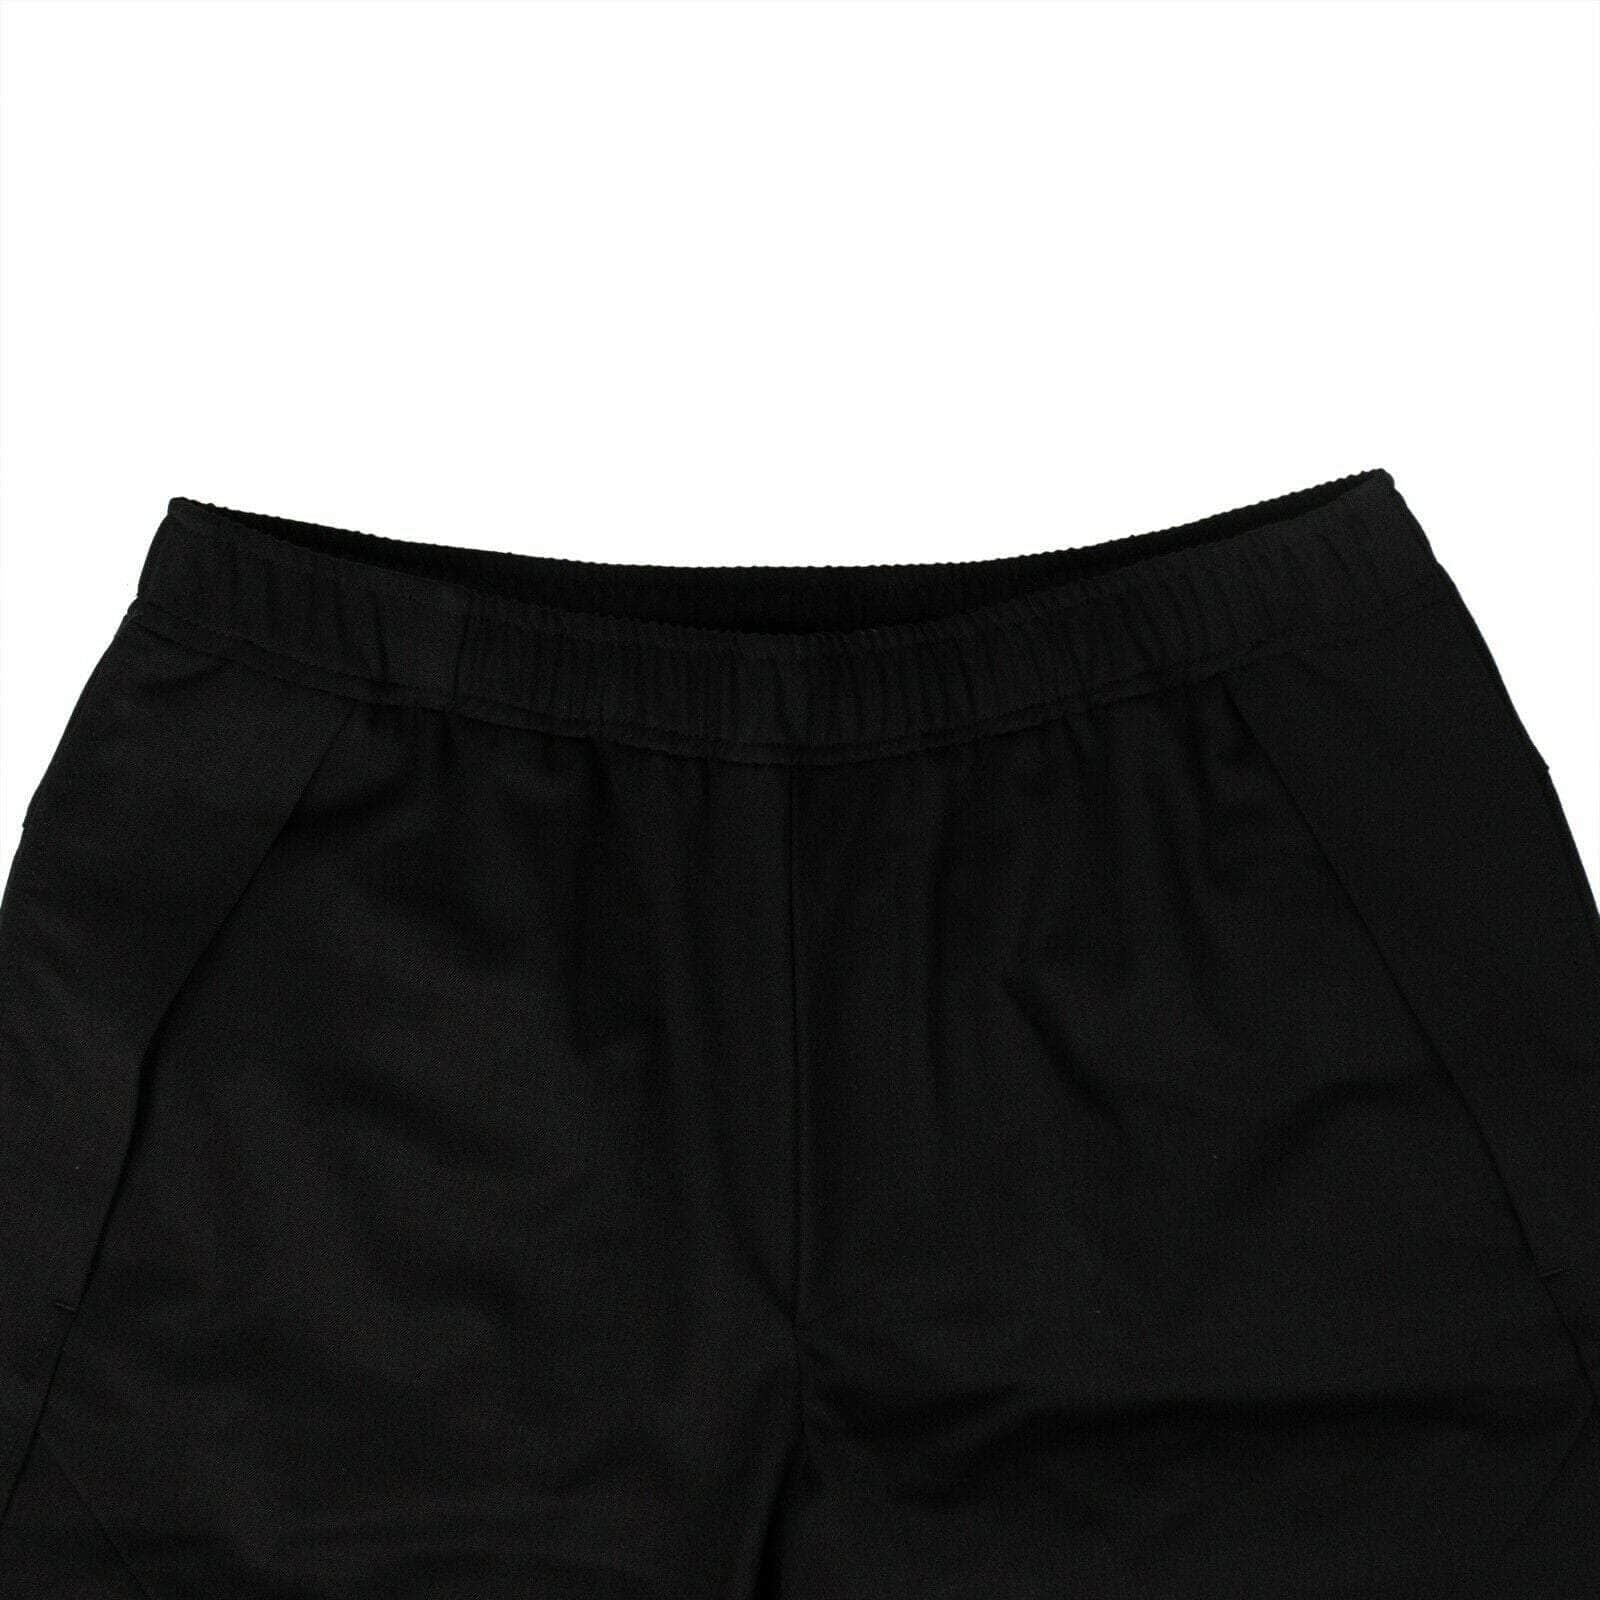 TIM COPPENS Men's Shorts Virgin Wool Staple Shorts - Black